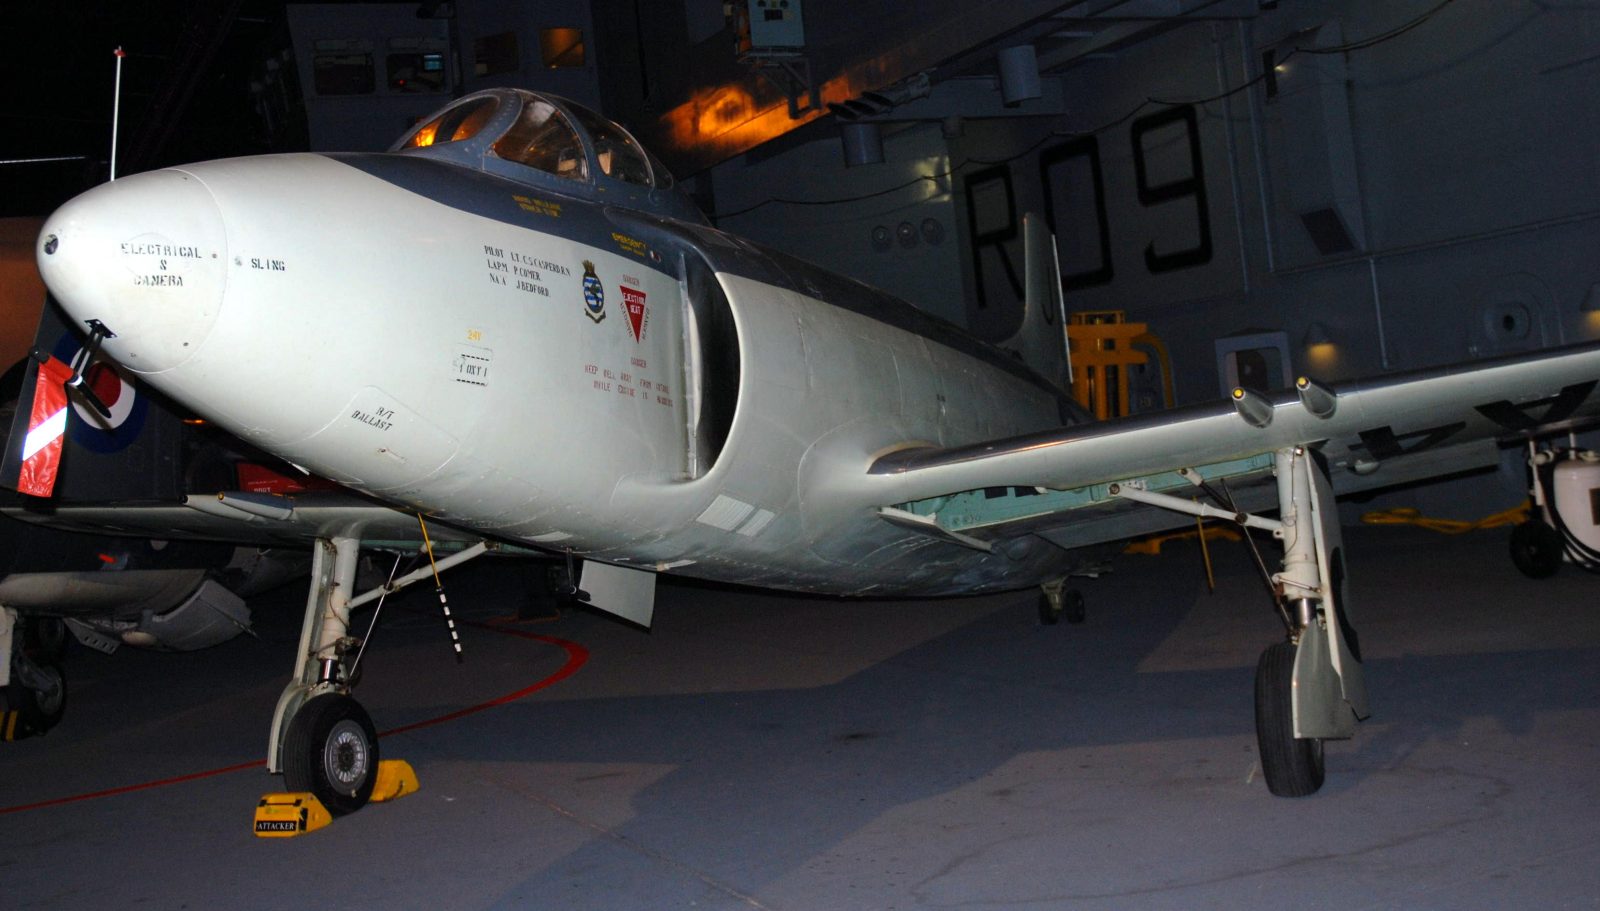 Supermarine Attacker: Royal Navy FAA's (Fleet Air Arms) first Jet Fighter